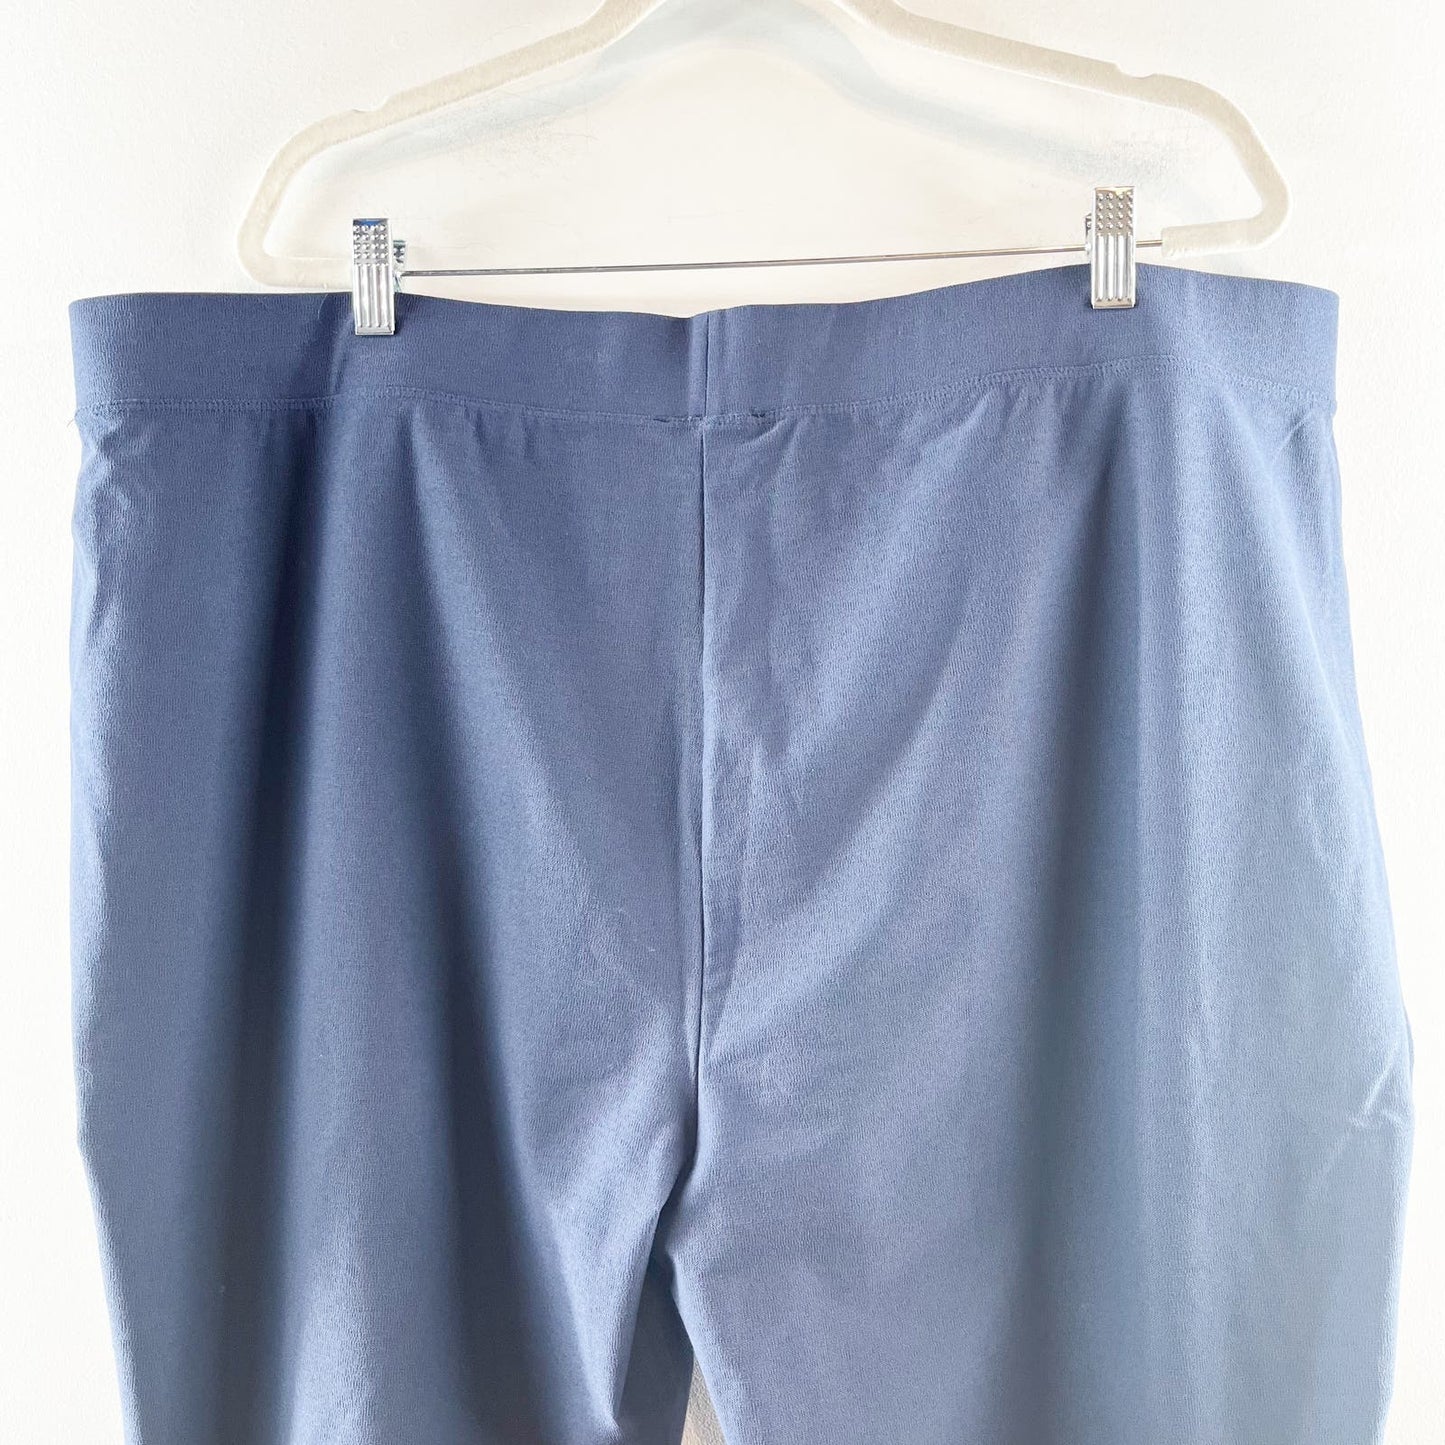 Eileen Fisher High Waisted Slim Fit Crop Ponte Pants Ocean Navy Blue 3X